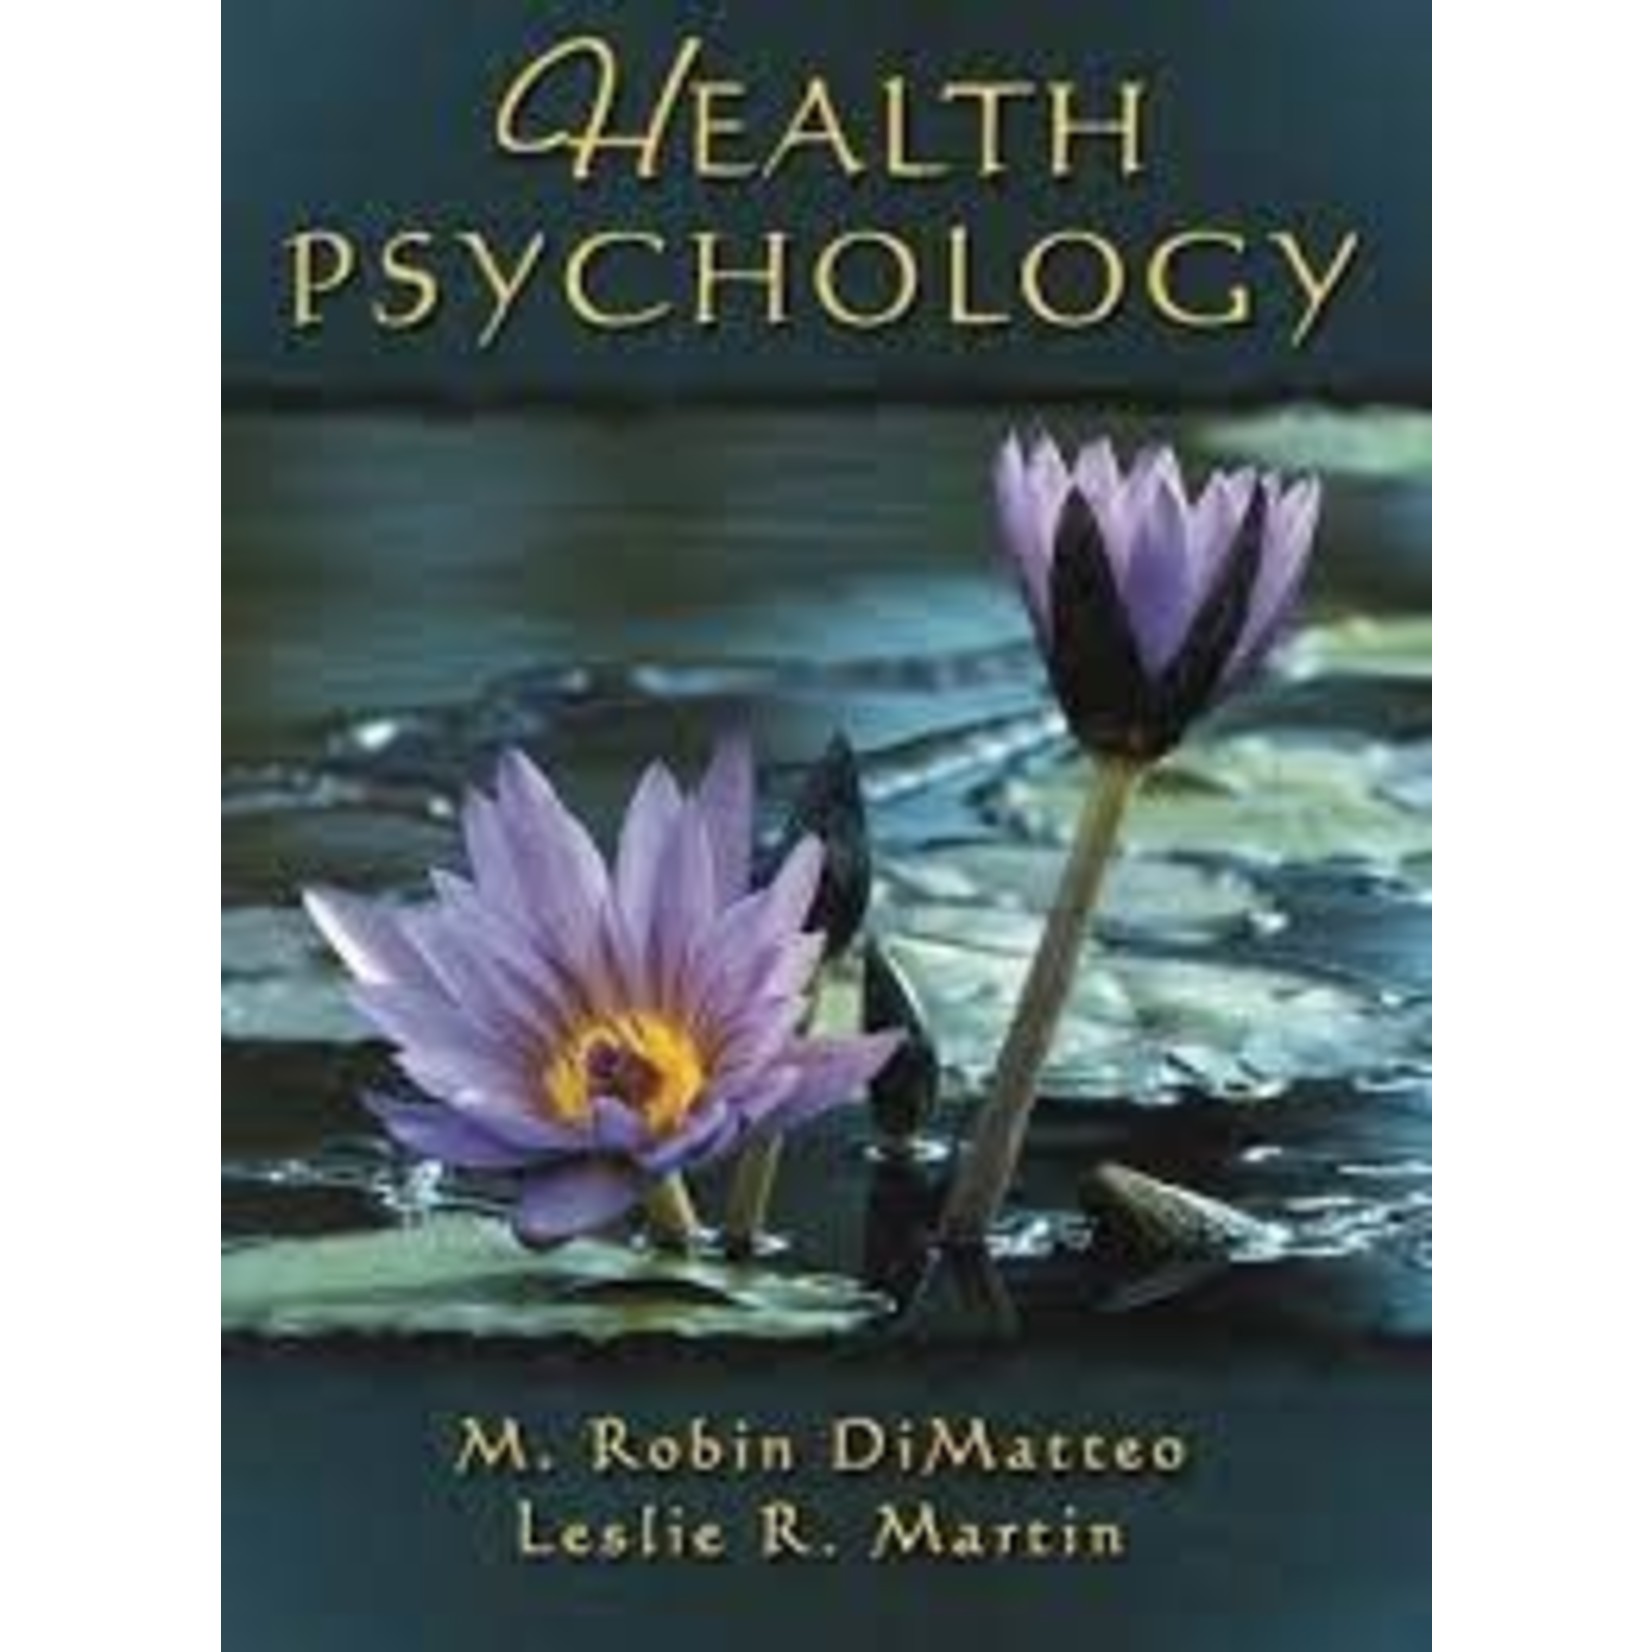 M. Robin DiMatteo & Leslie R. Martin Health Psychology